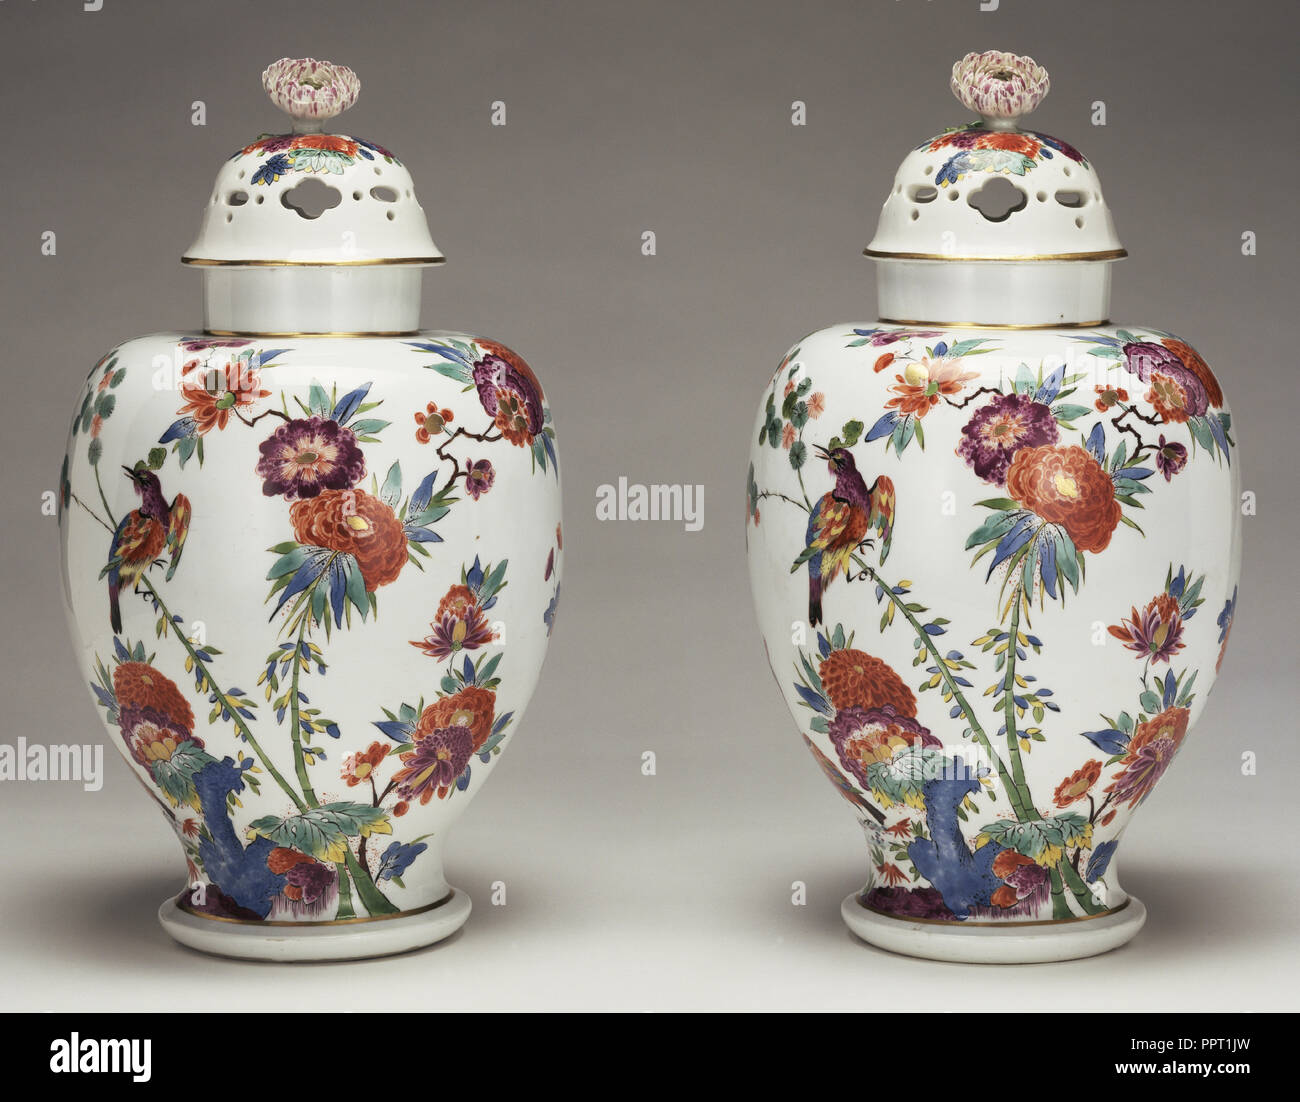 Pair of Lidded Vases; Meissen Porcelain Manufactory, German, active 1710 - present, Meissen, Germany; before 1733; lids Stock Photo